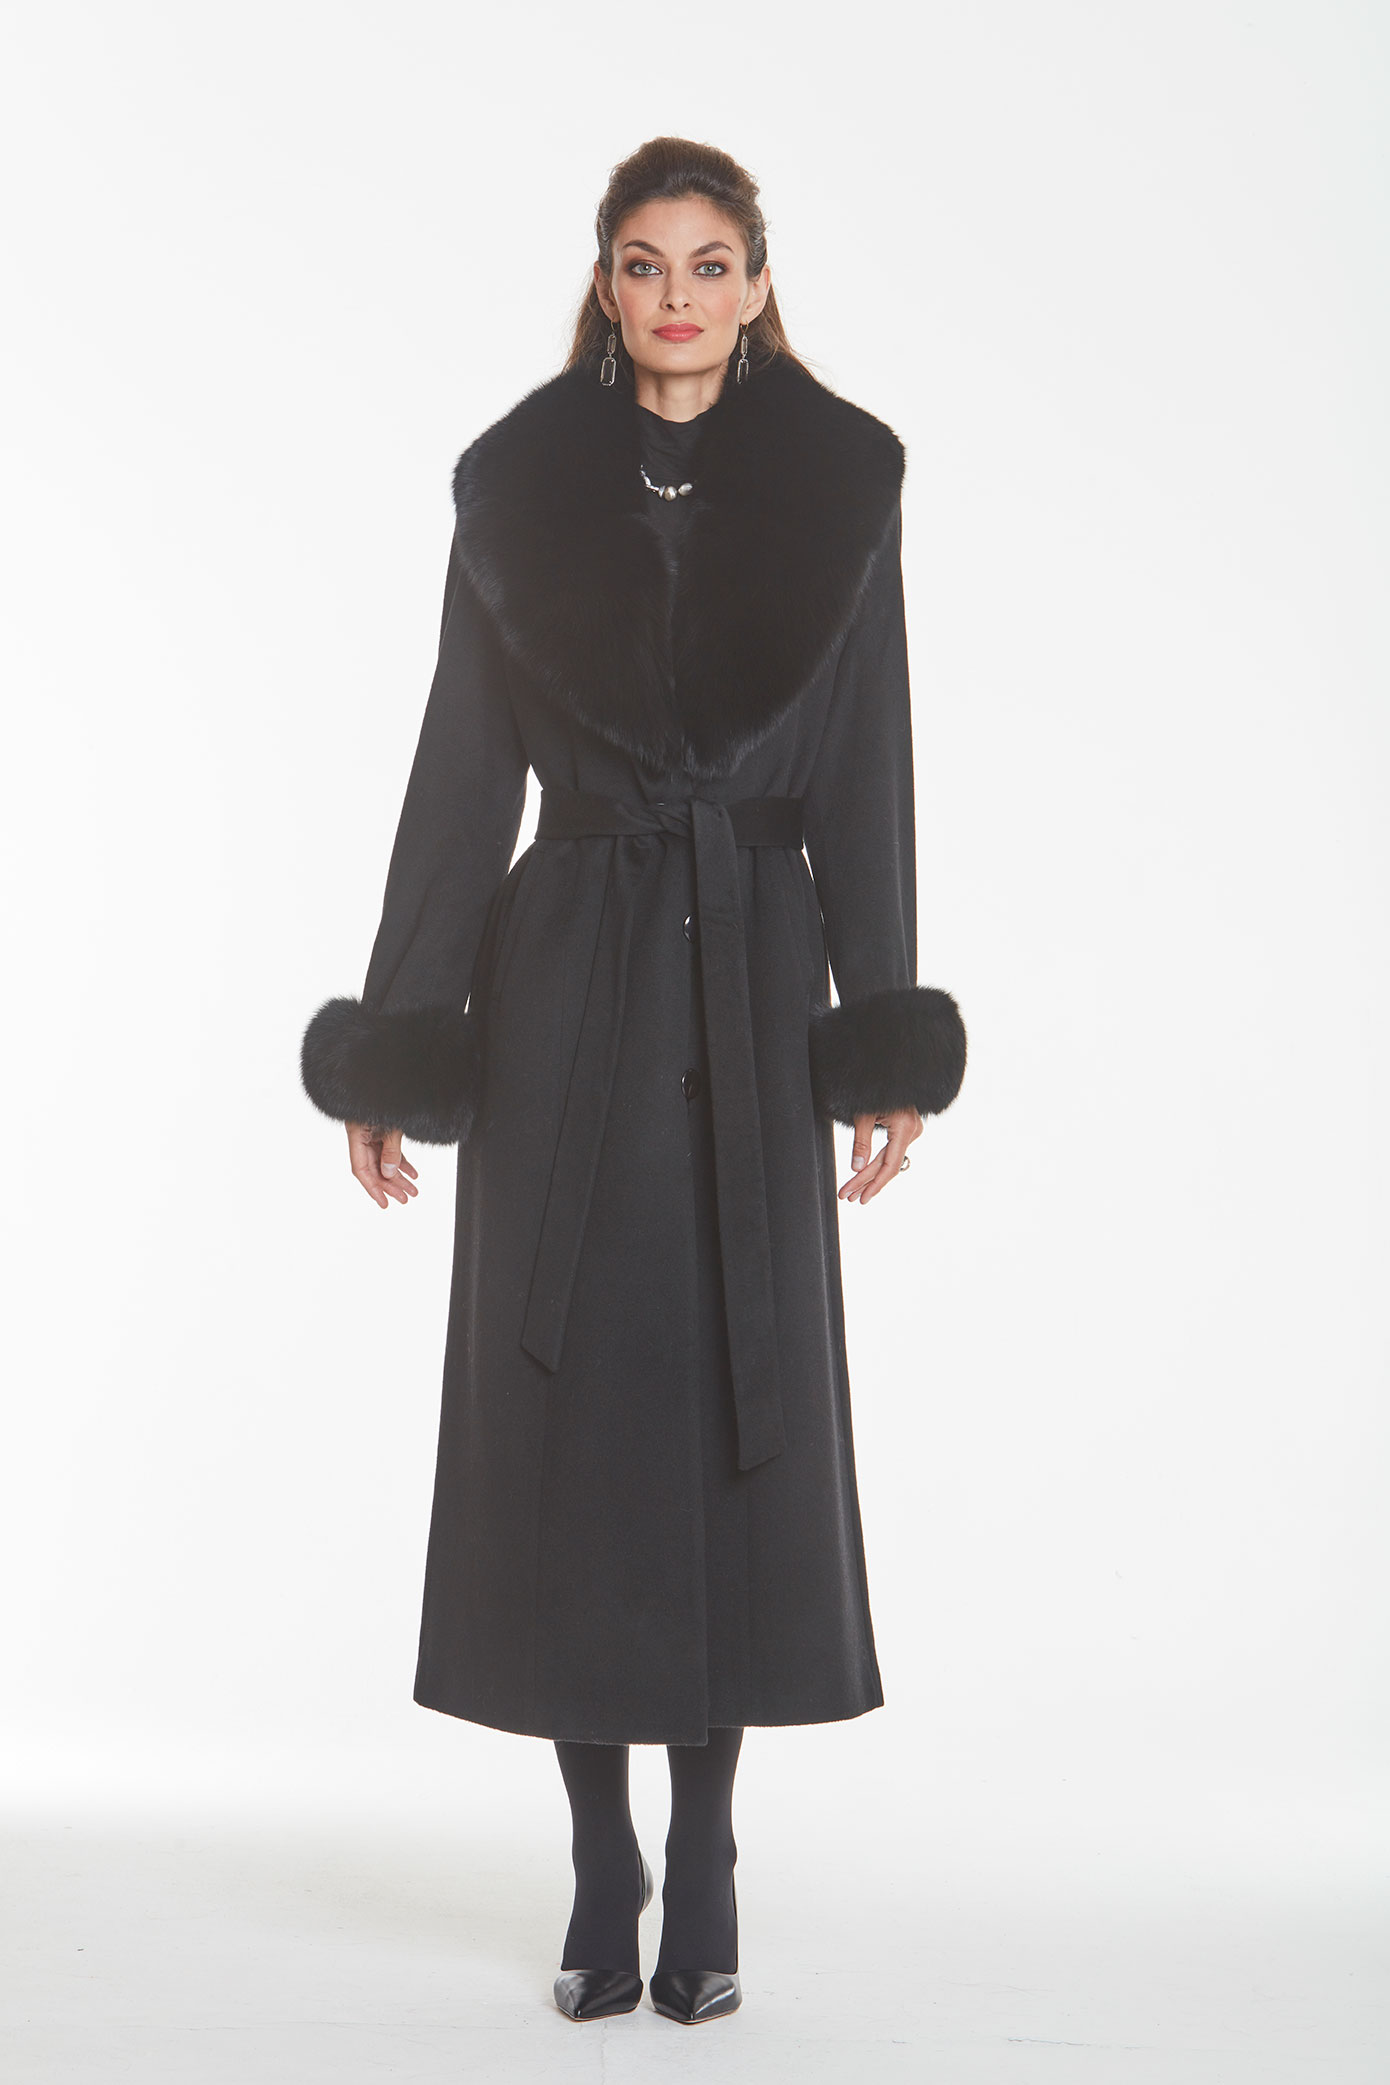 Fox Fur Trim Collar and Cuffs Full Length Long Cashmere Coat for Women